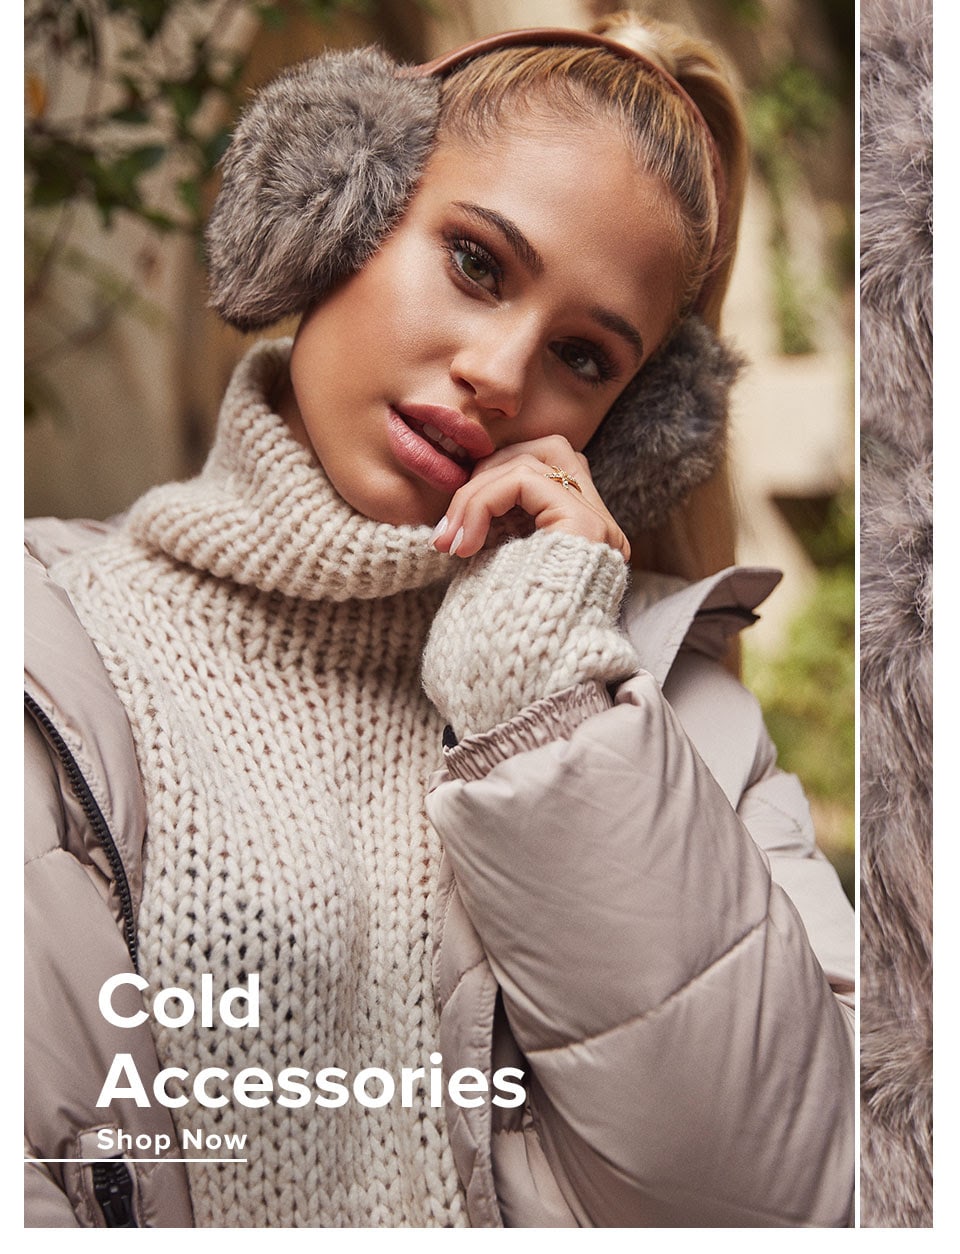 Cold accessories. Shop now.